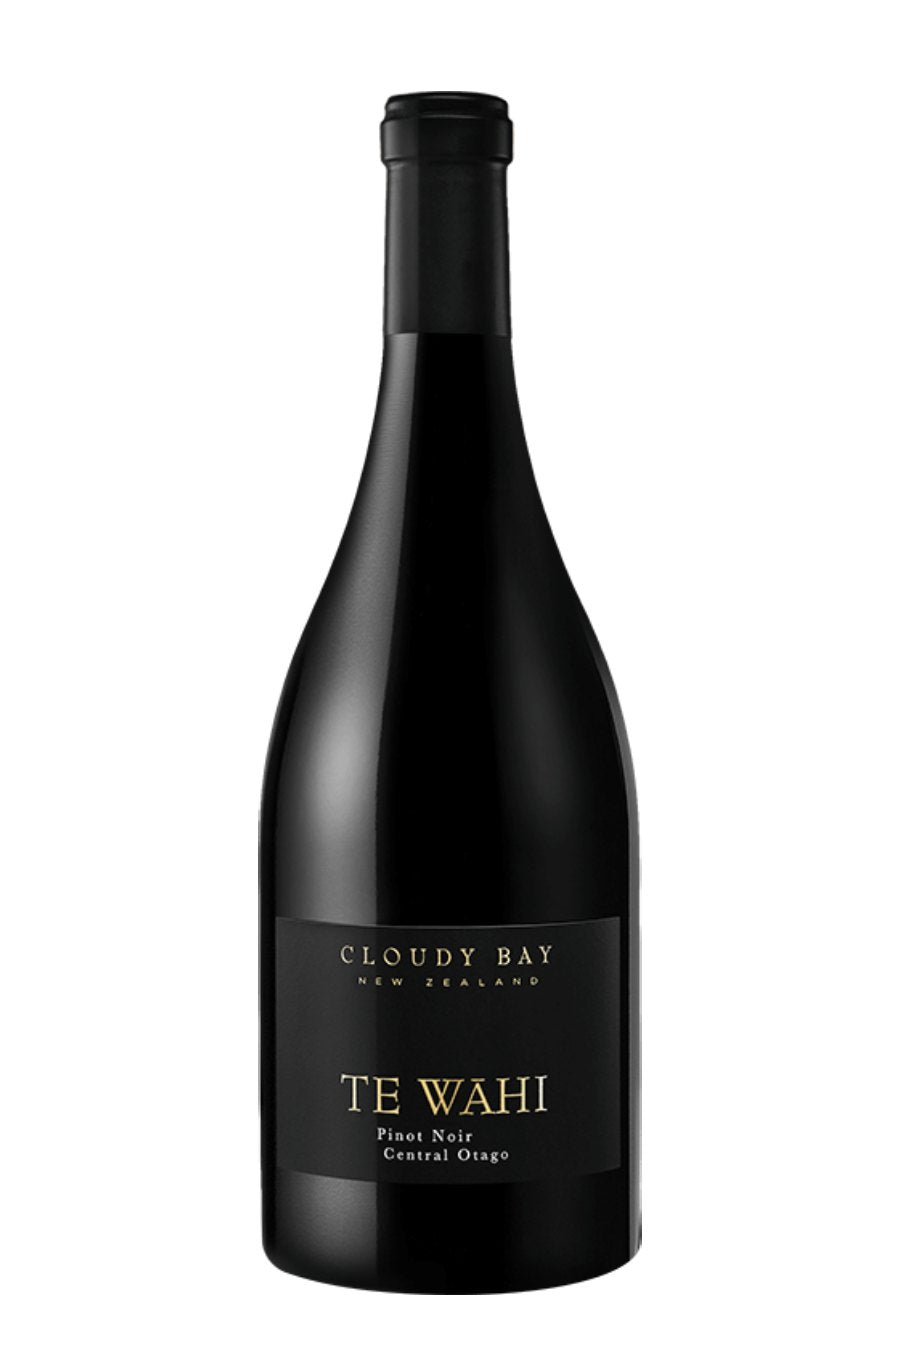 Cloudy Bay Te Wahi Pinot Noir Central Otago 2018